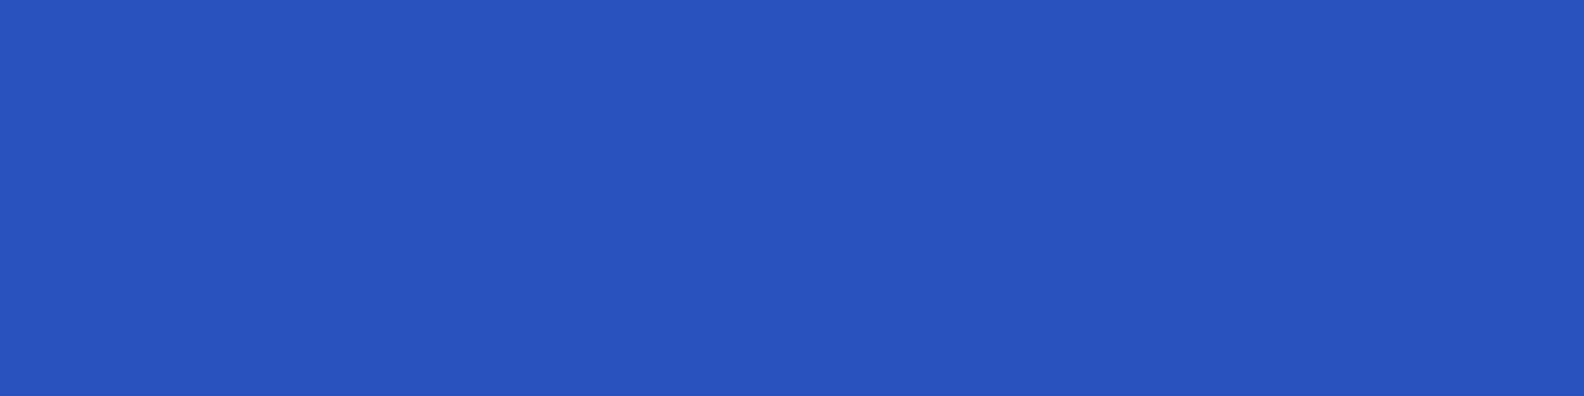 1584x396 Cerulean Blue Solid Color Background